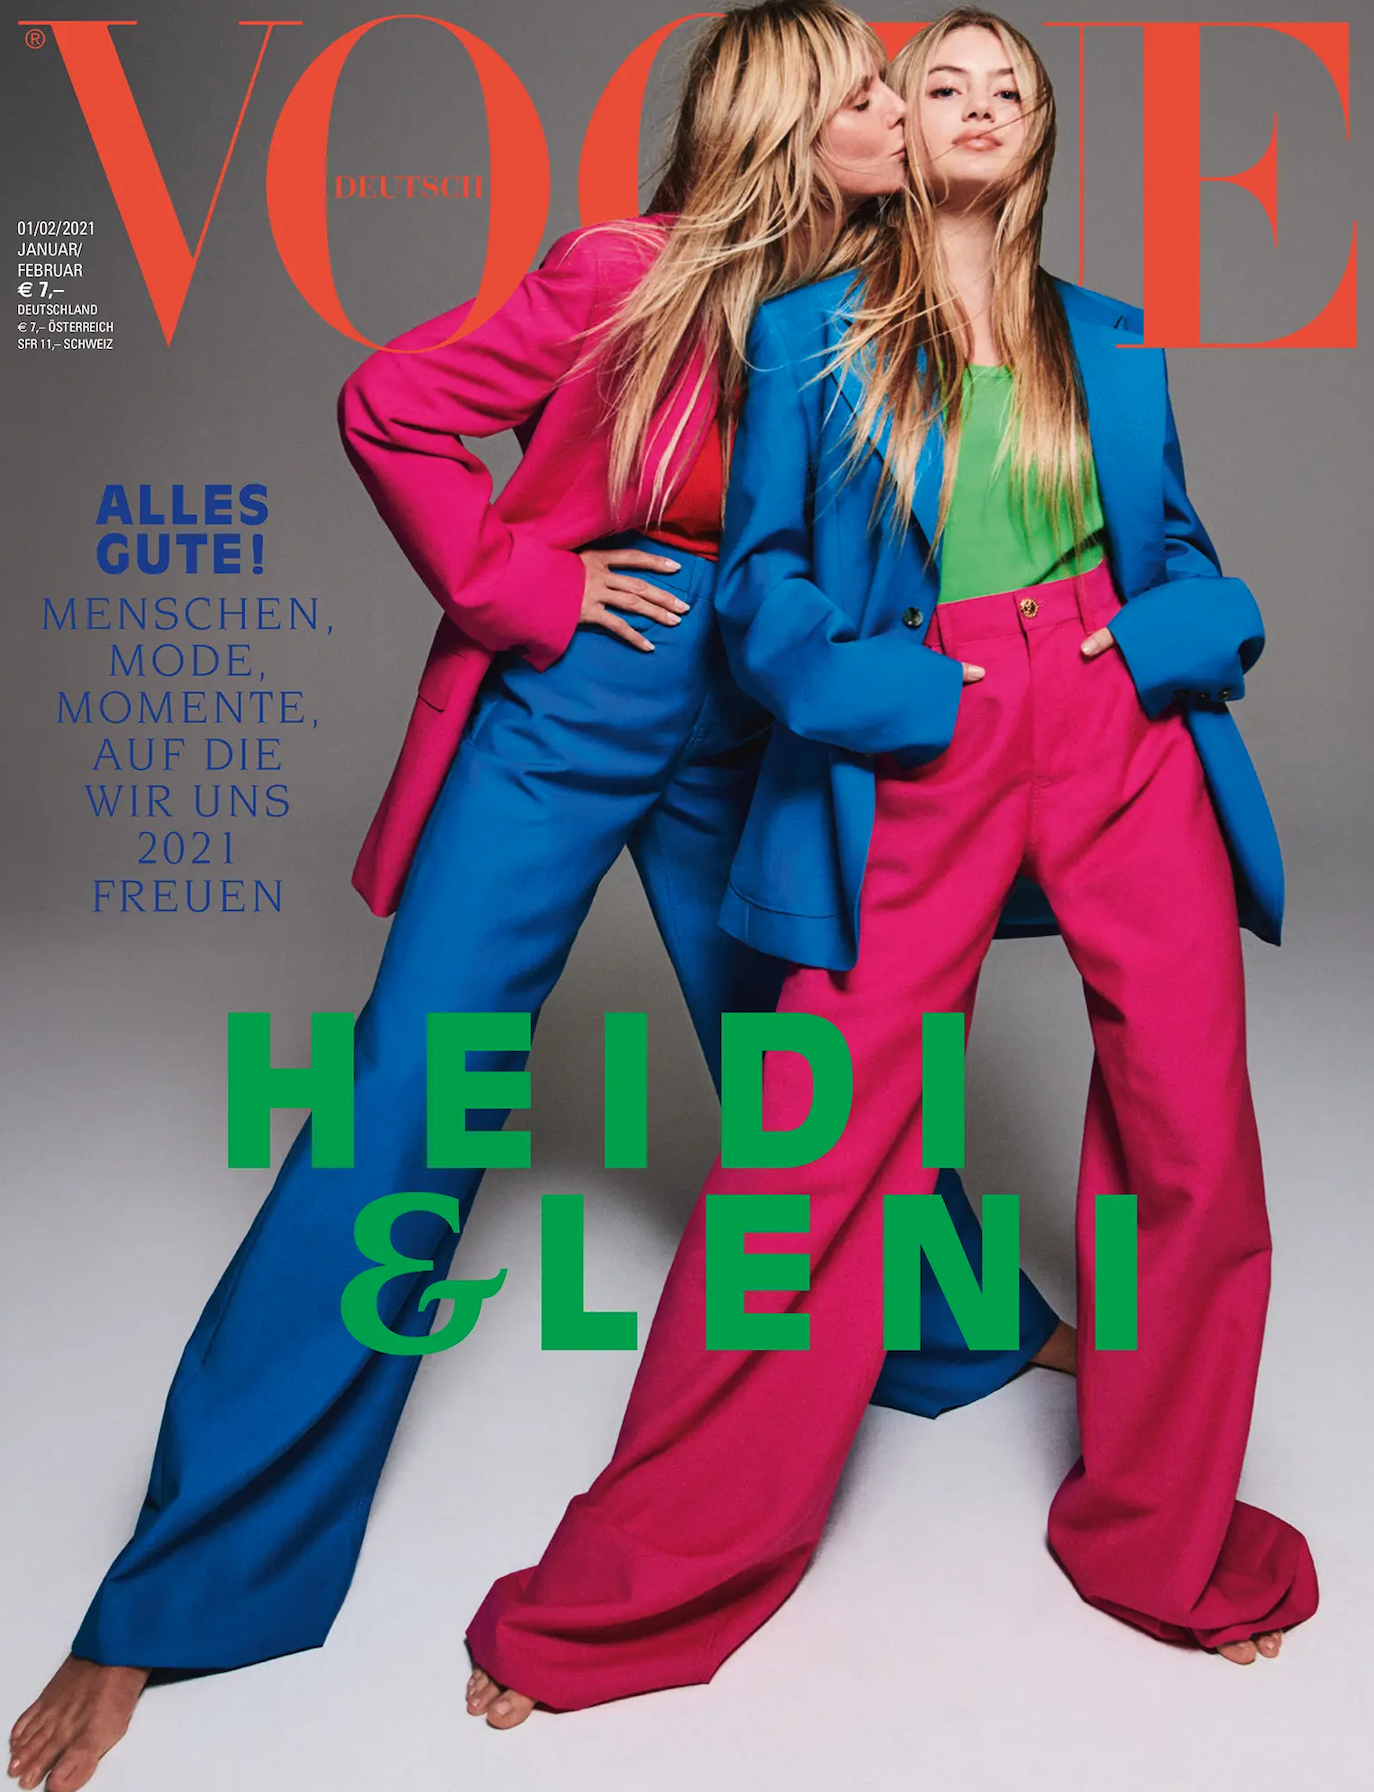 Models: Heidi and Leni Klum for Vogue Germany